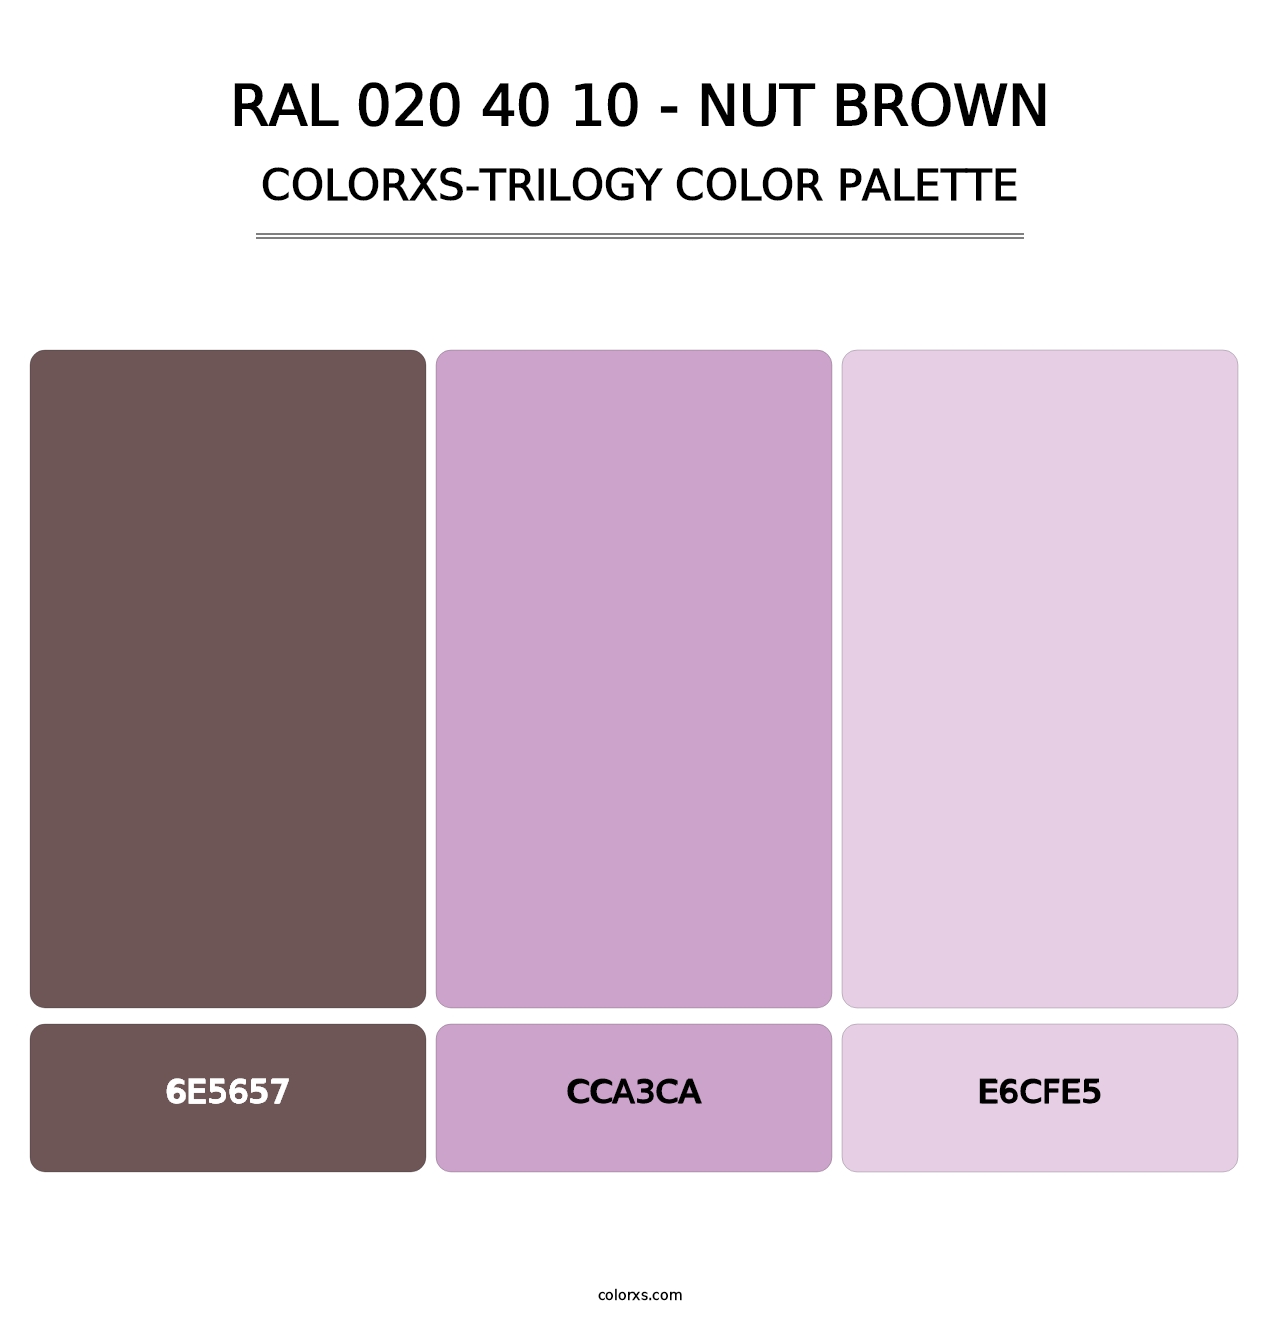 RAL 020 40 10 - Nut Brown - Colorxs Trilogy Palette